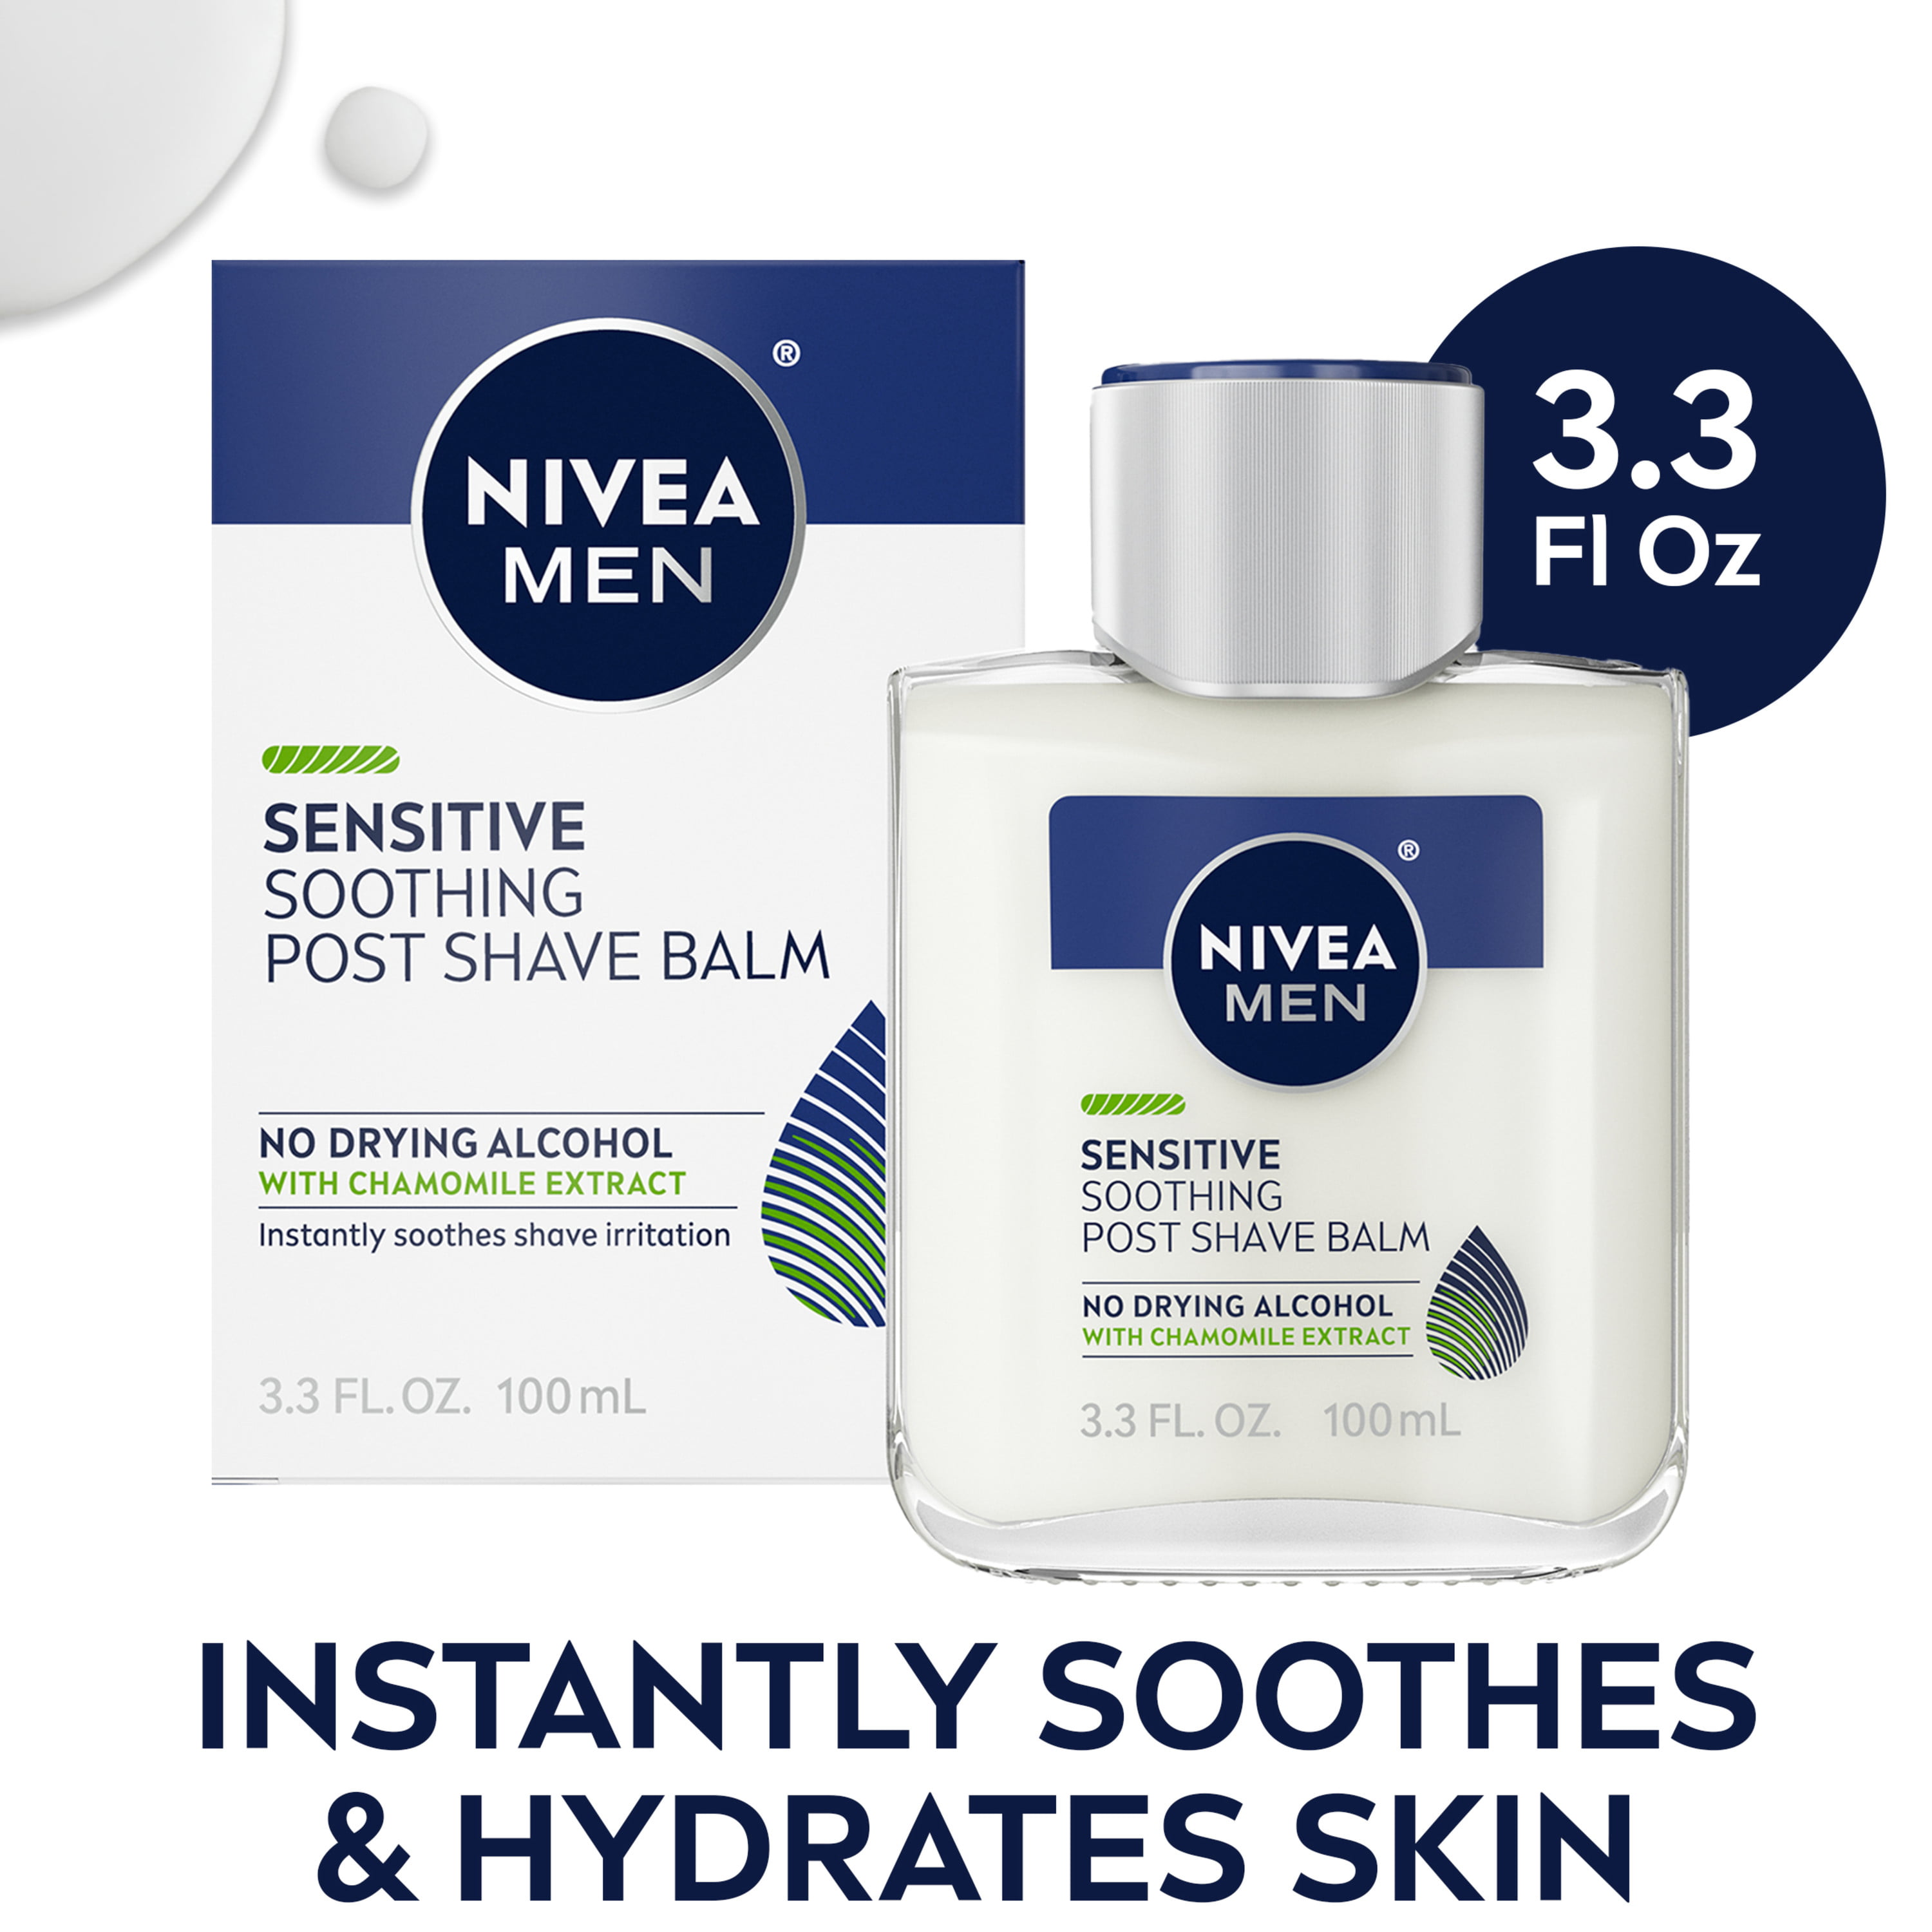 NIVEA MEN Sensitive Post Shave Balm, 3.3 Fl Oz Bottle